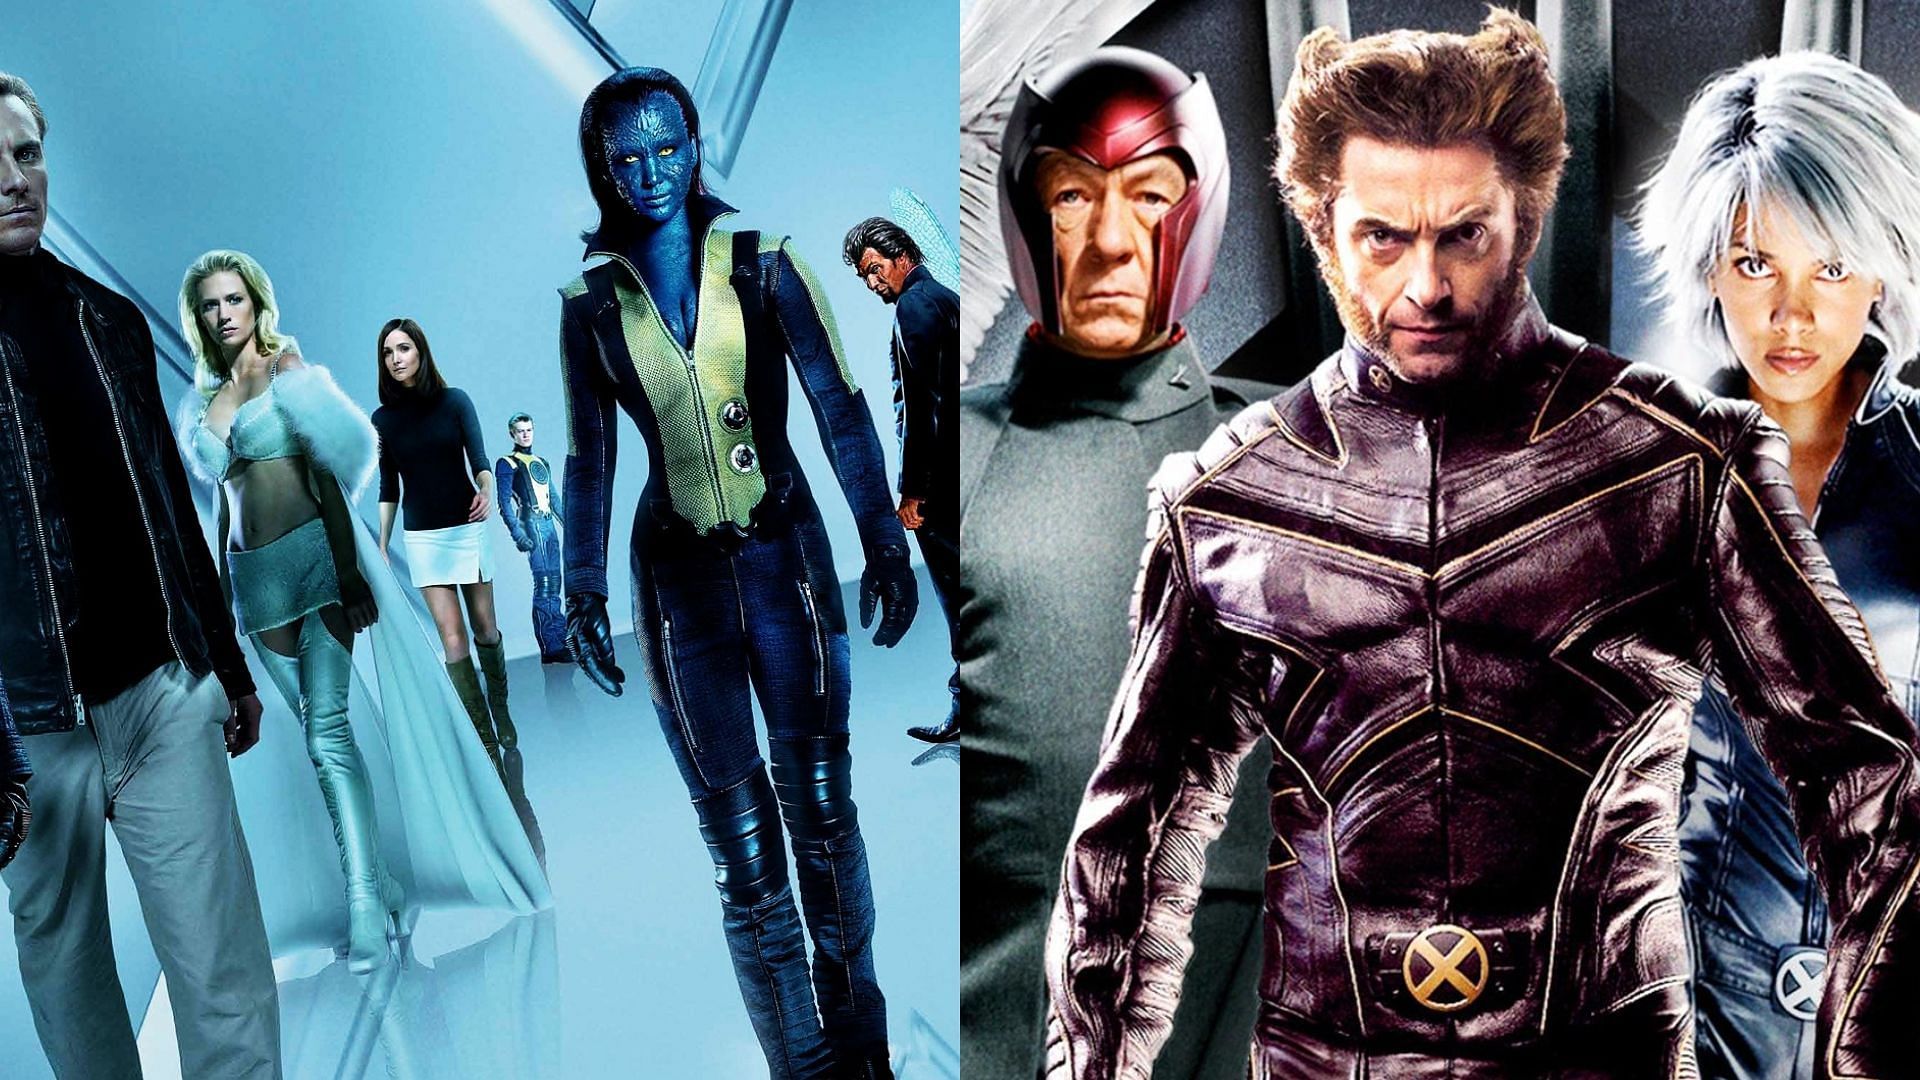 X-Men (images via 20th Century Fox/Marvel)